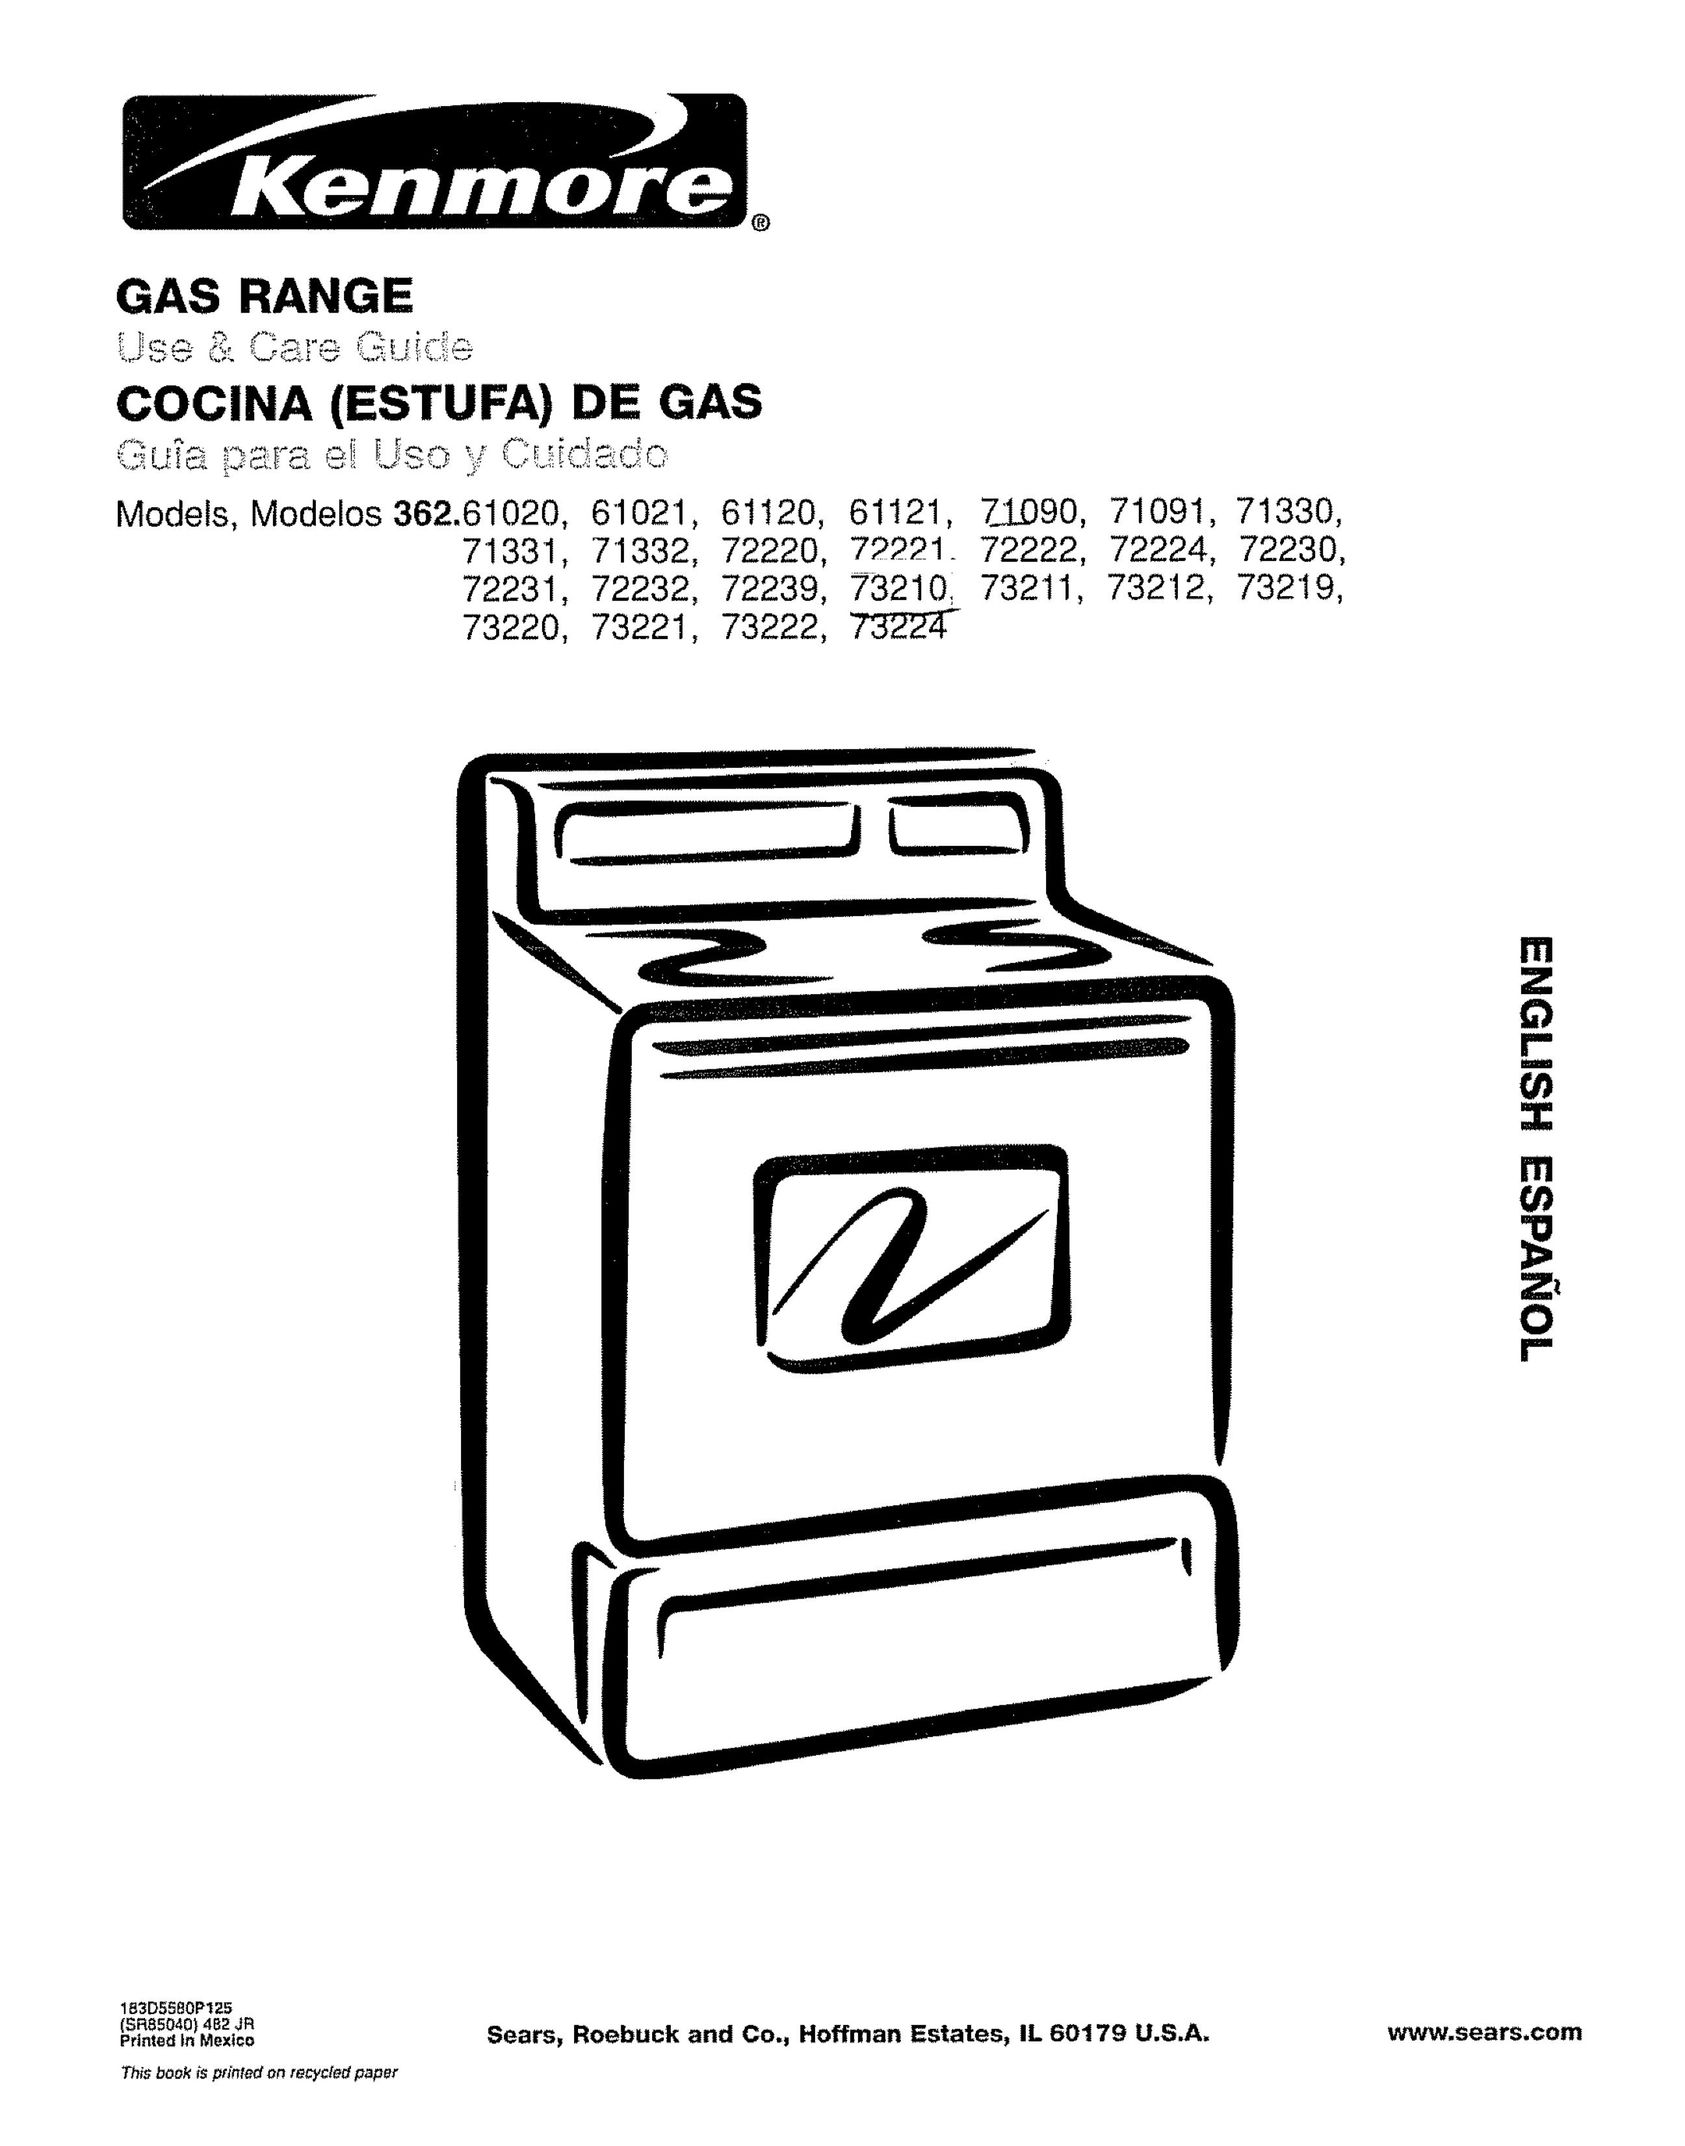 Kenmore 362.72220 Range User Manual